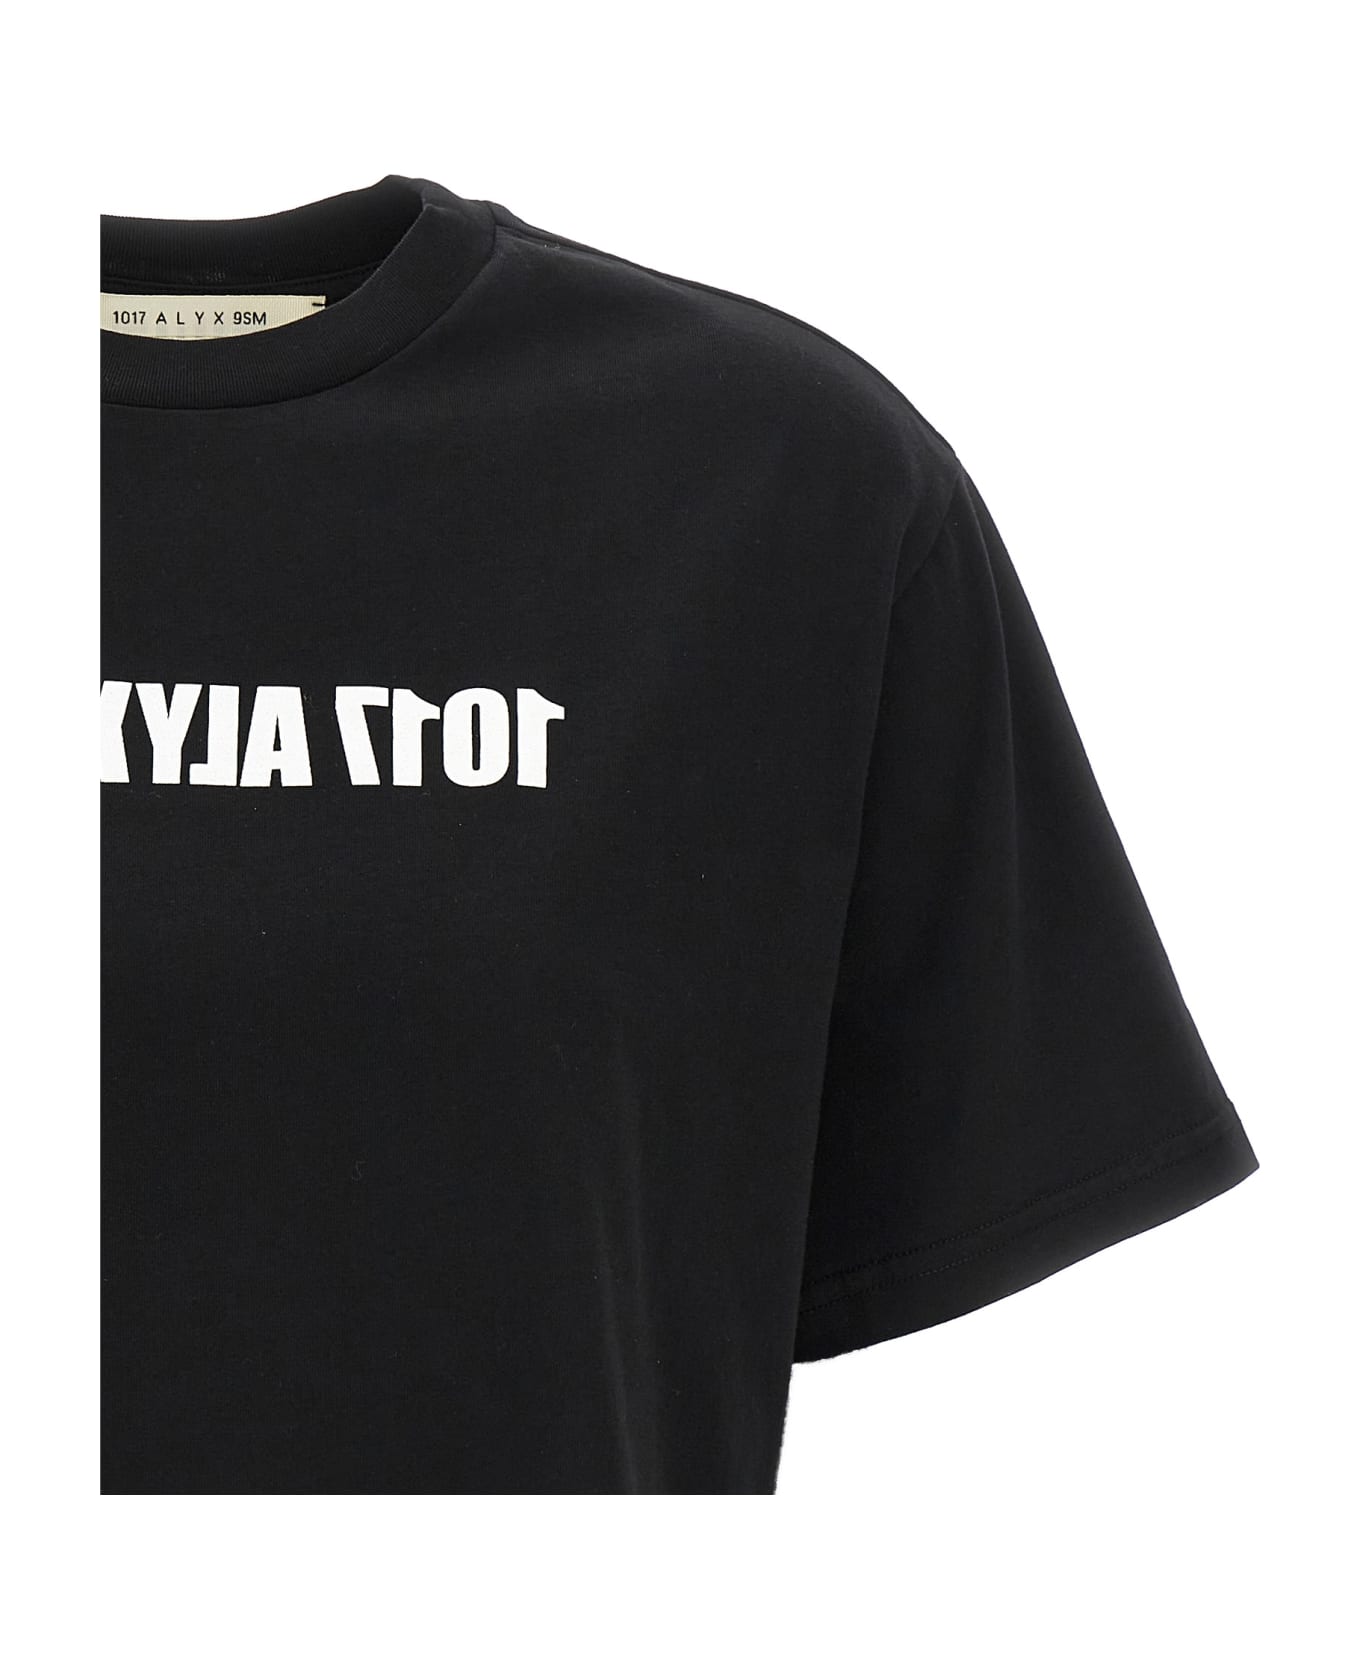 1017 ALYX 9SM Logo Print T-shirt - White/Black Tシャツ